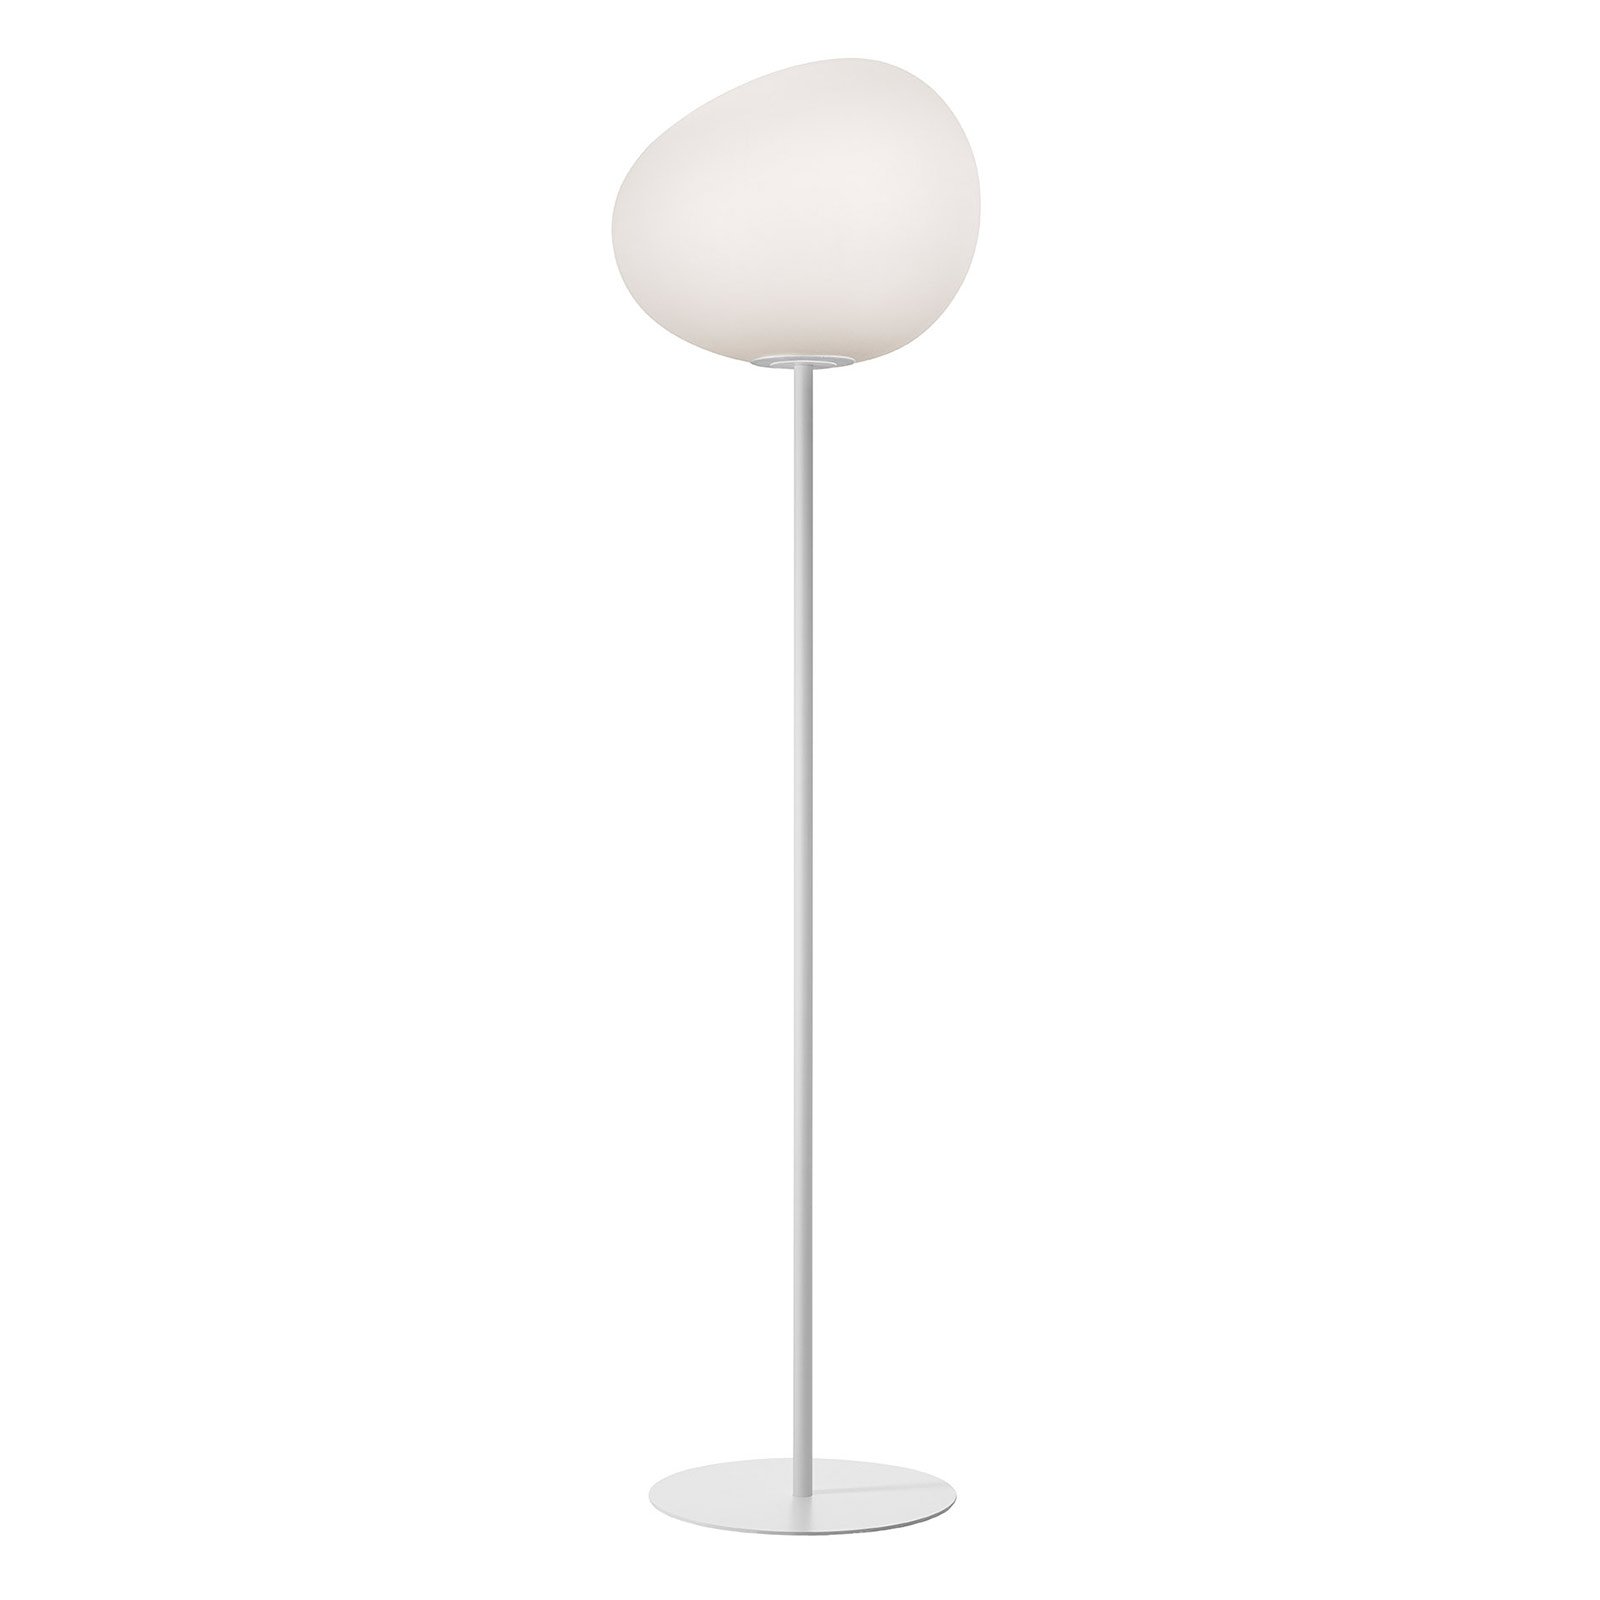 Foscarini Gregg grande floor lamp, 186 cm, white